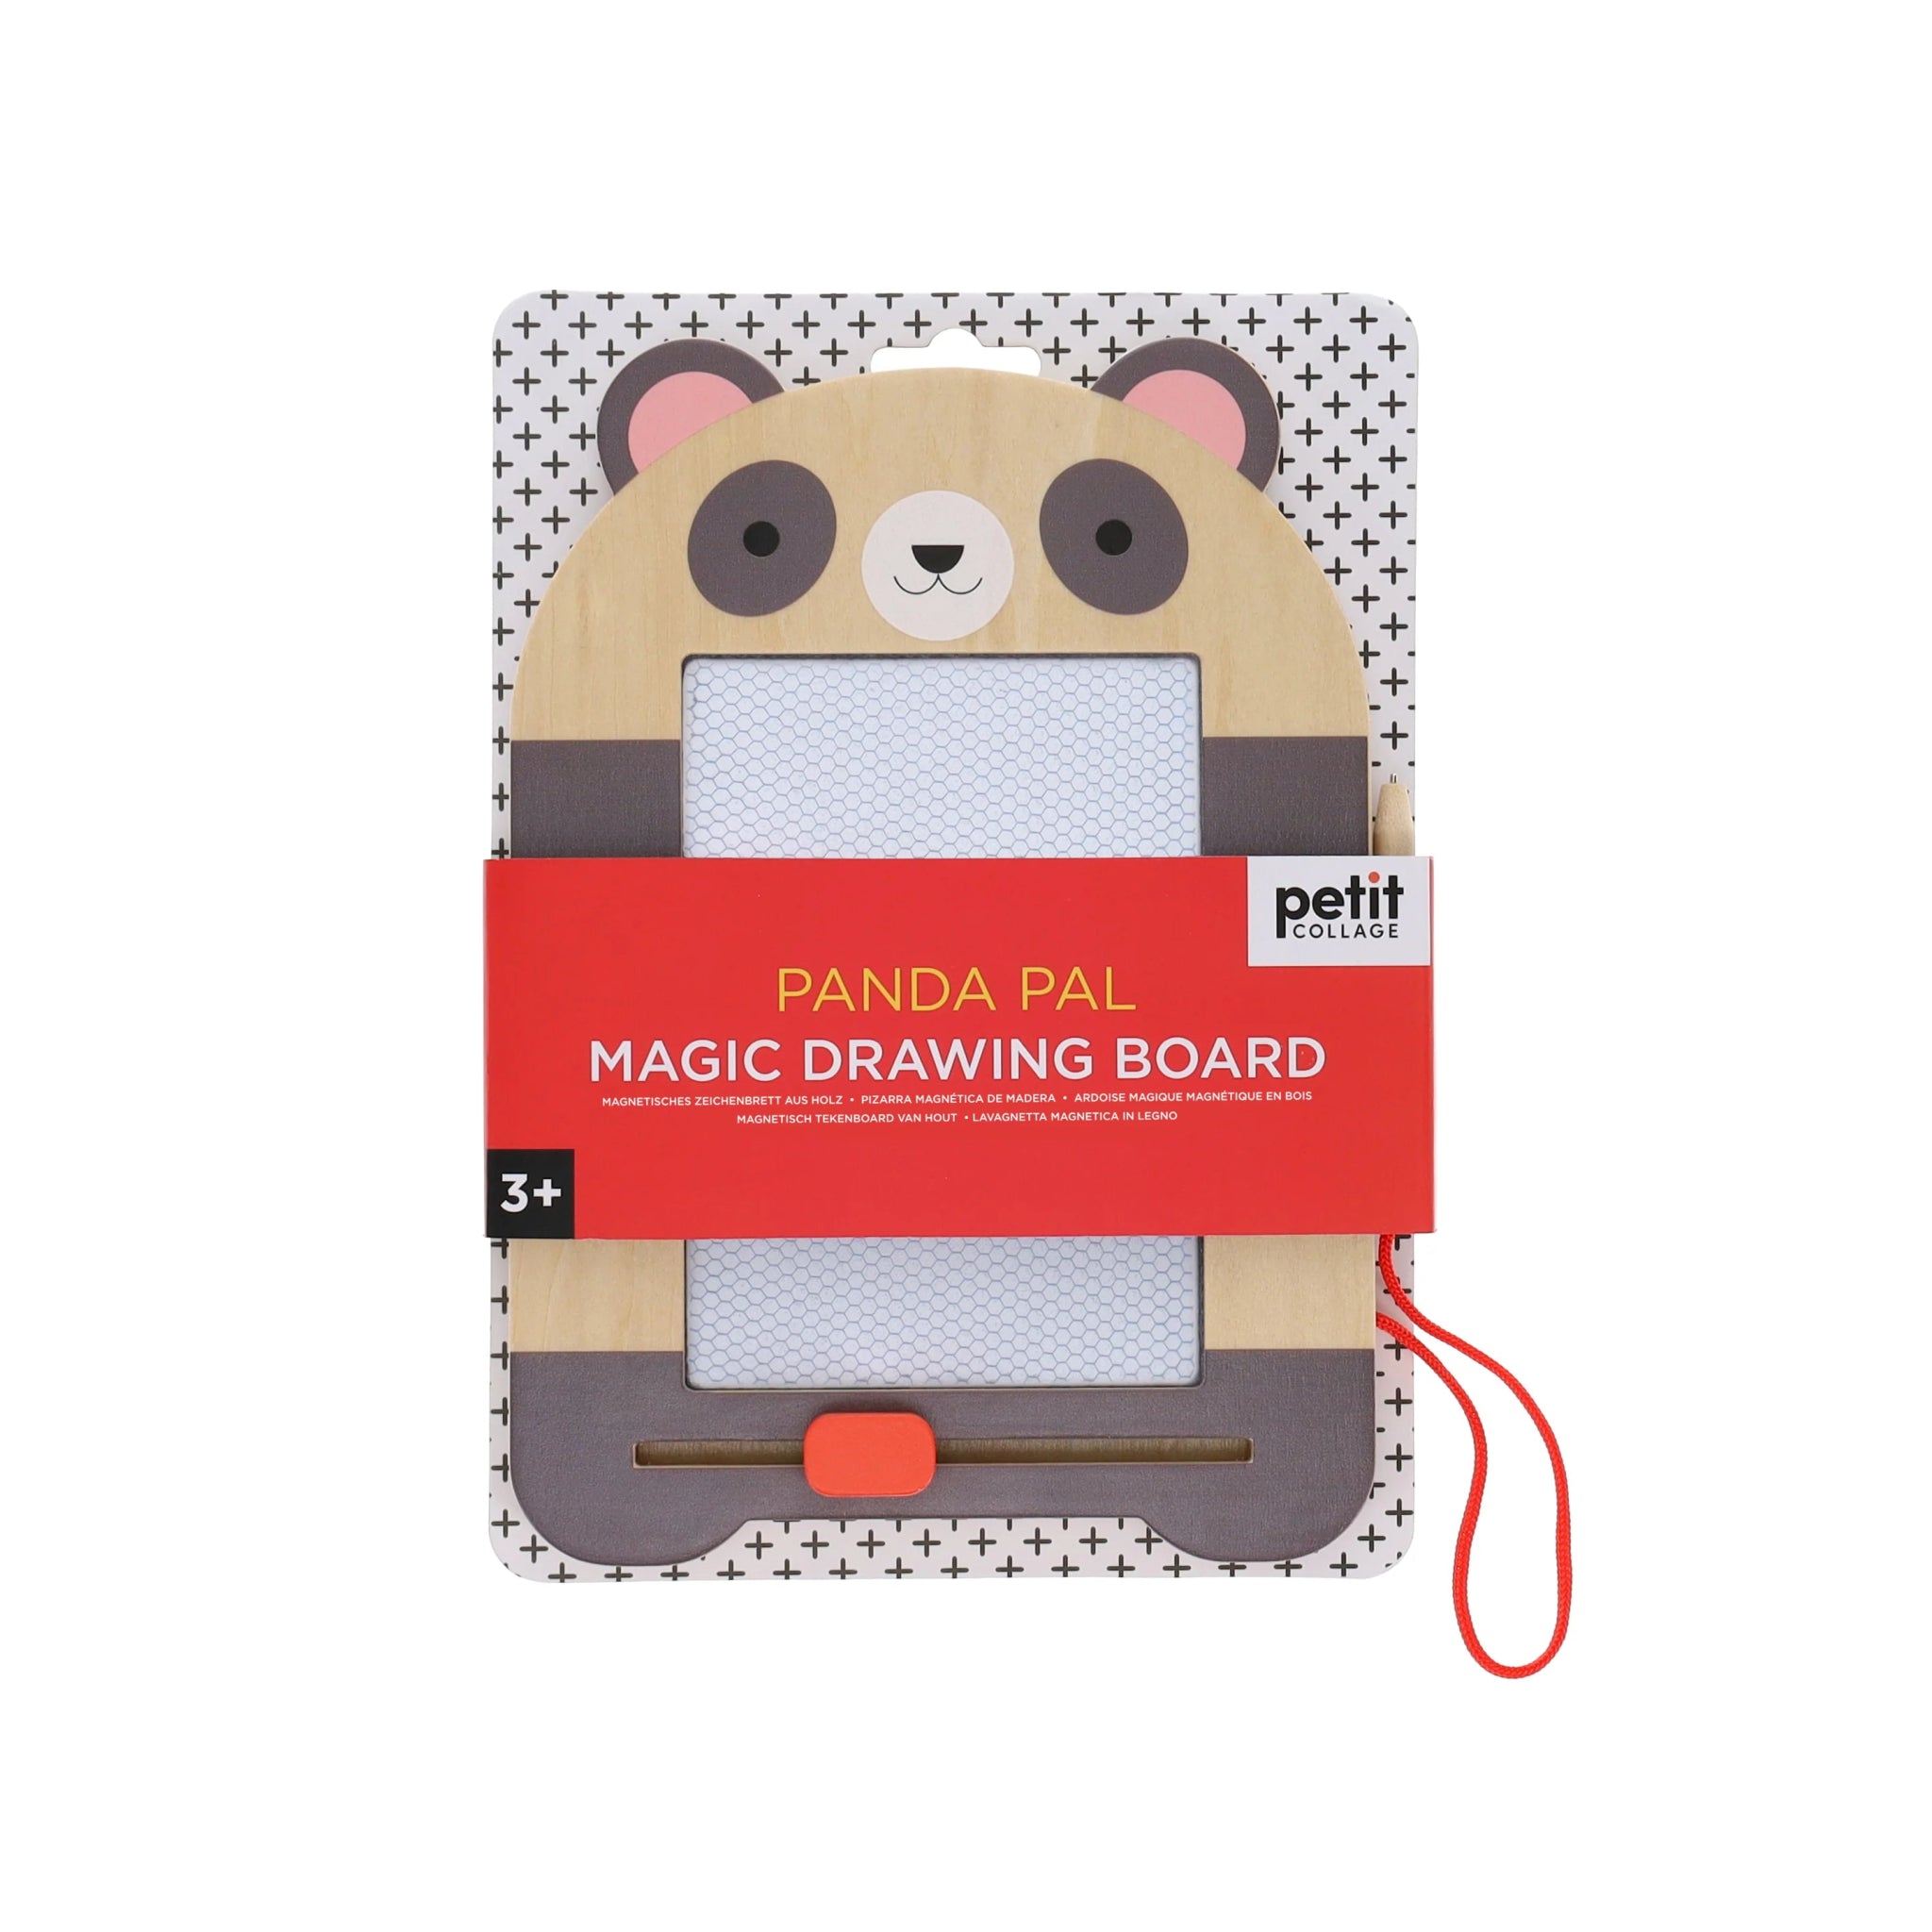 Magic Drawing Board Panda Pal - Wren Harper